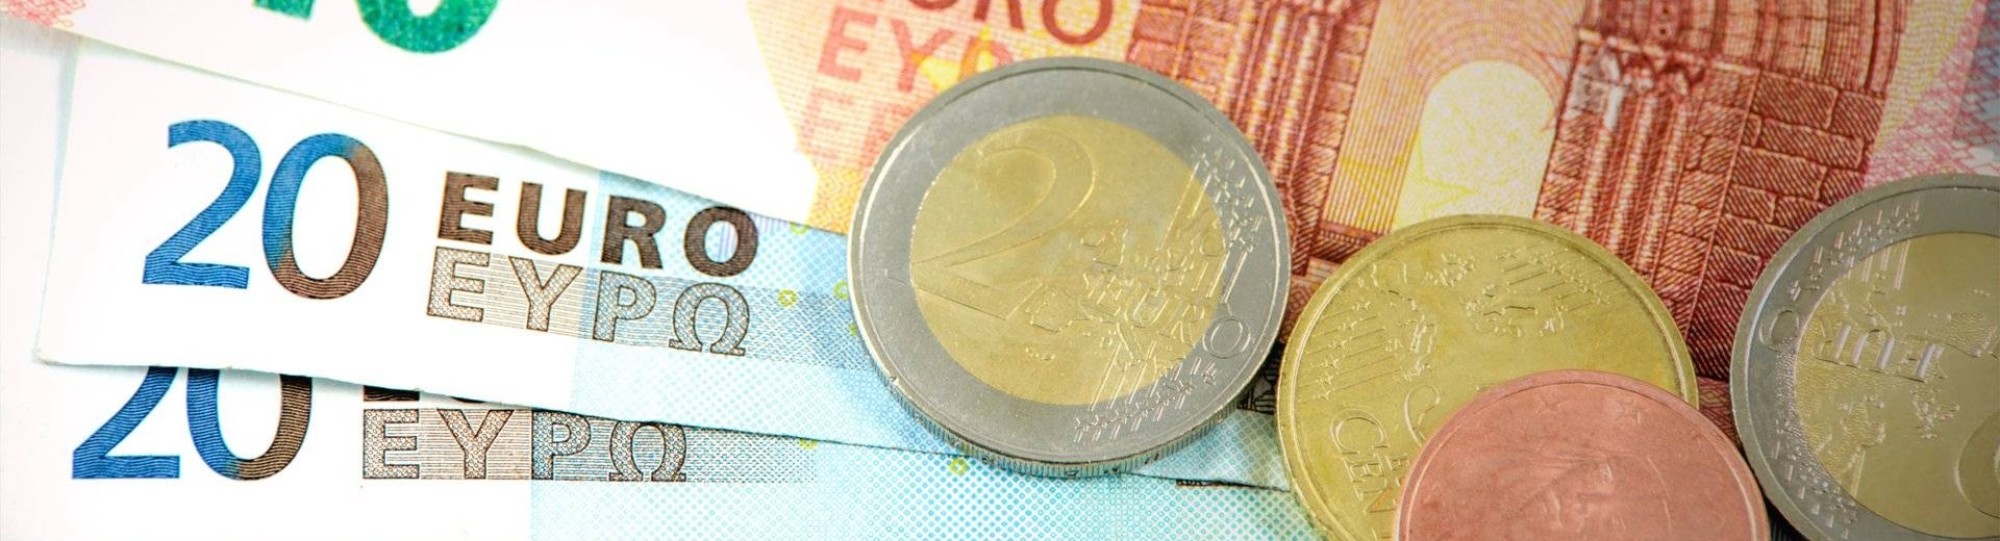 briefgeld euro budget